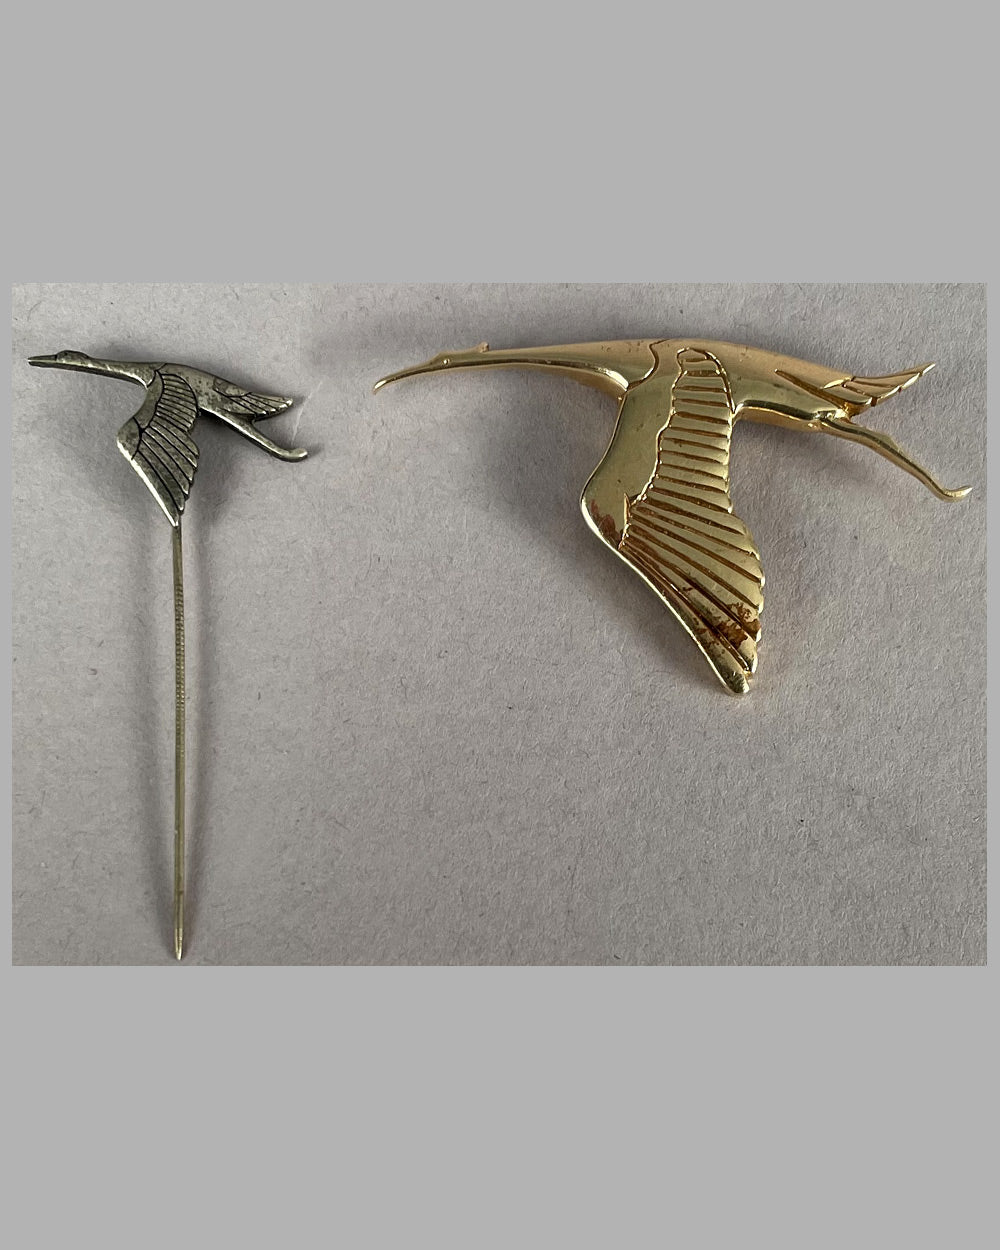 Two Hispano Suiza lapel pins